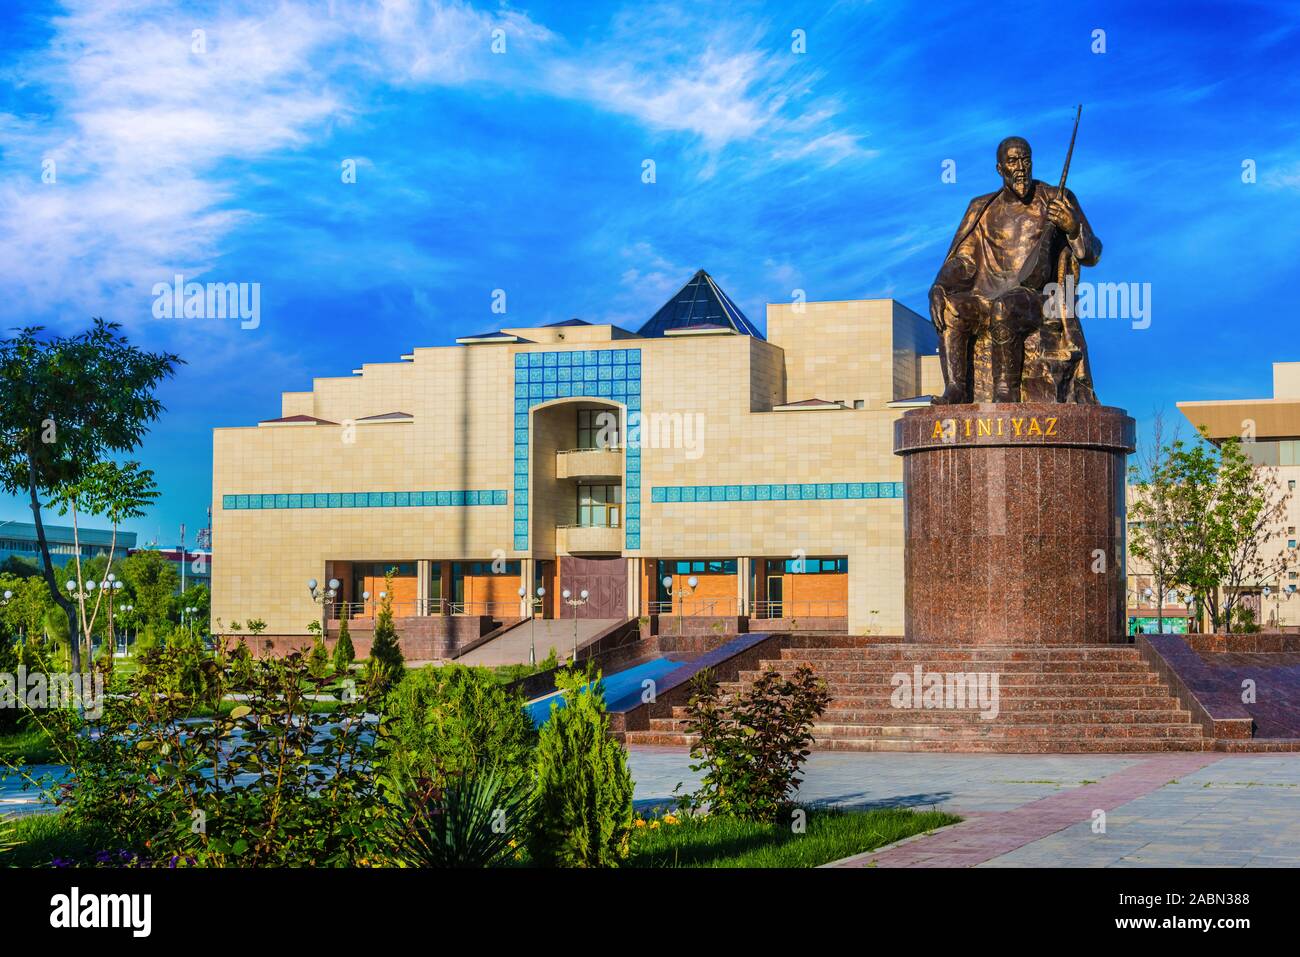 The monument of Karakalpak poet Ajiniyaz and the State Art Museum of the Republic of Karakalpakstan in Nukus, Uzbekistan Stock Photo